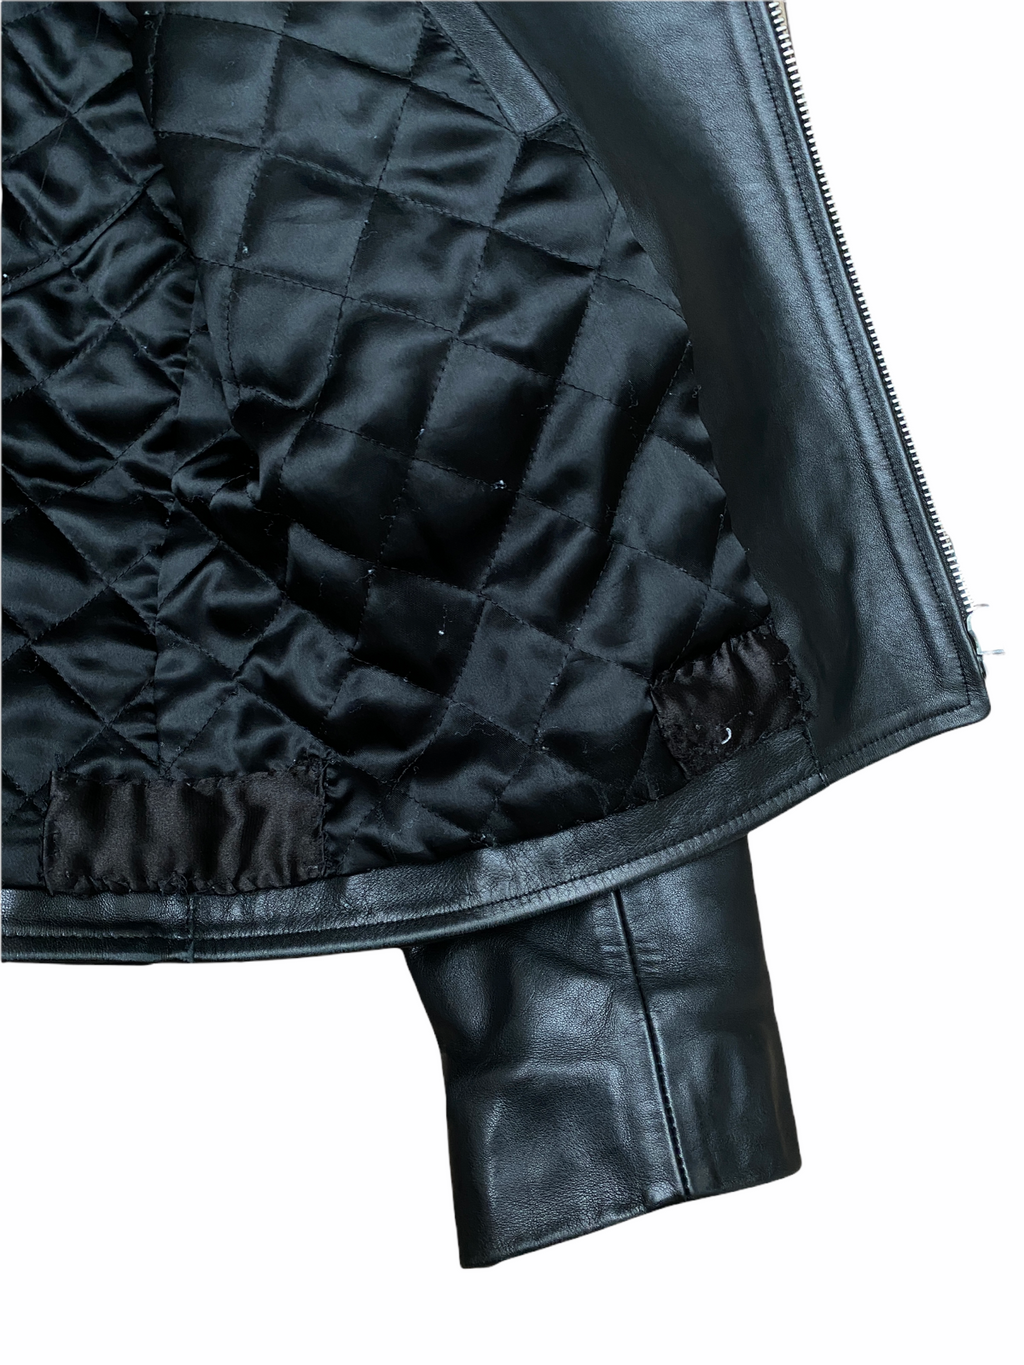 Black Biker Leather Jacket  Size M